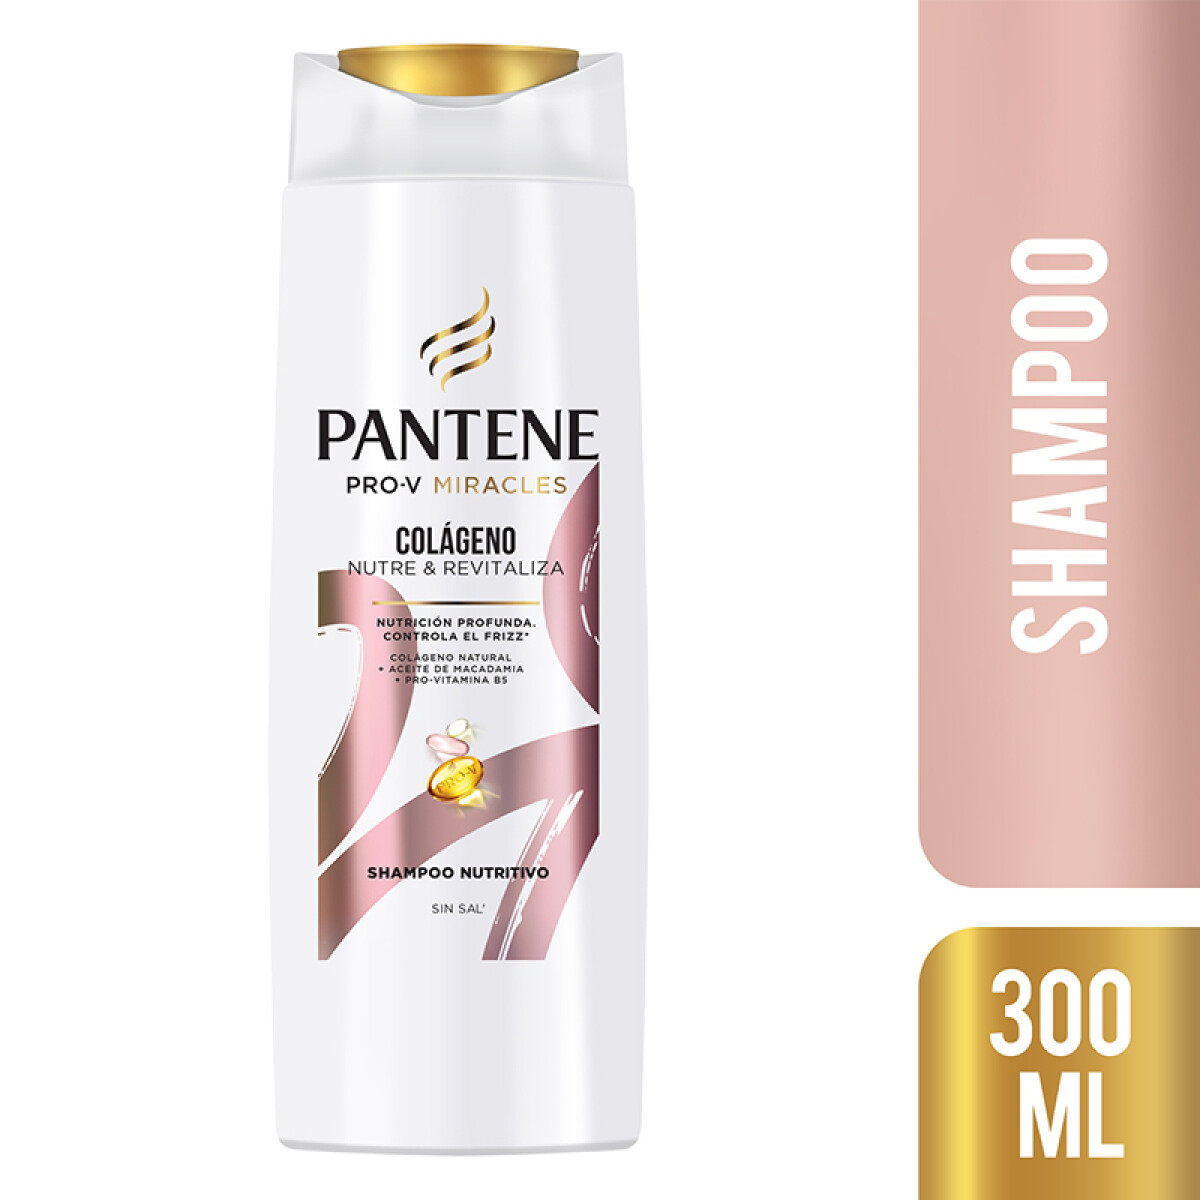 Pantene colágeno - Shampoo 300 ml 